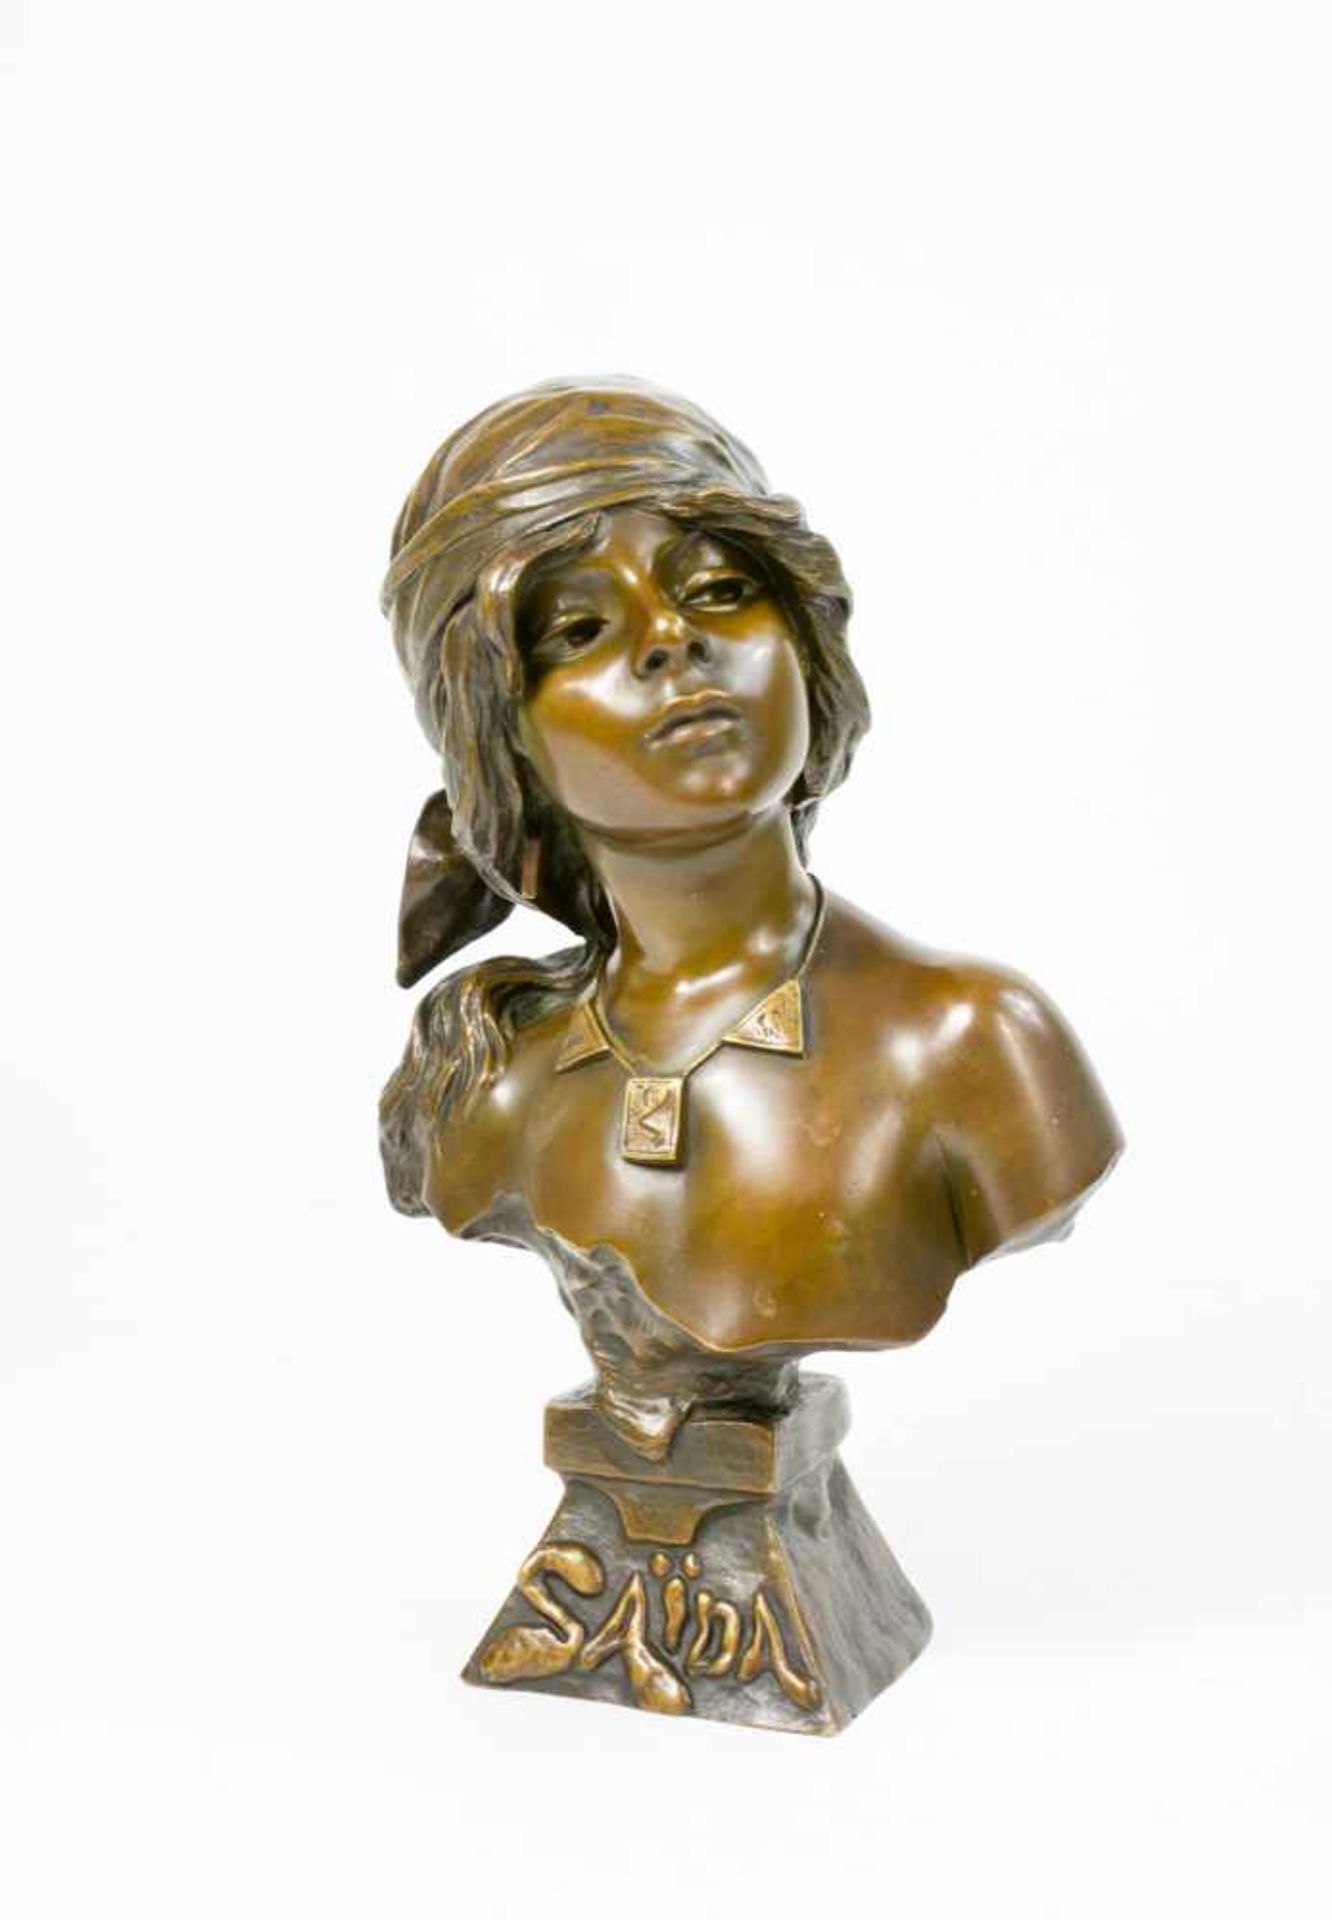 Emmanuel Villanis (1858 Lille - 1914 Paris) Saida, Bronze, Höhe 33 cm, rückseitig signiert, vorne